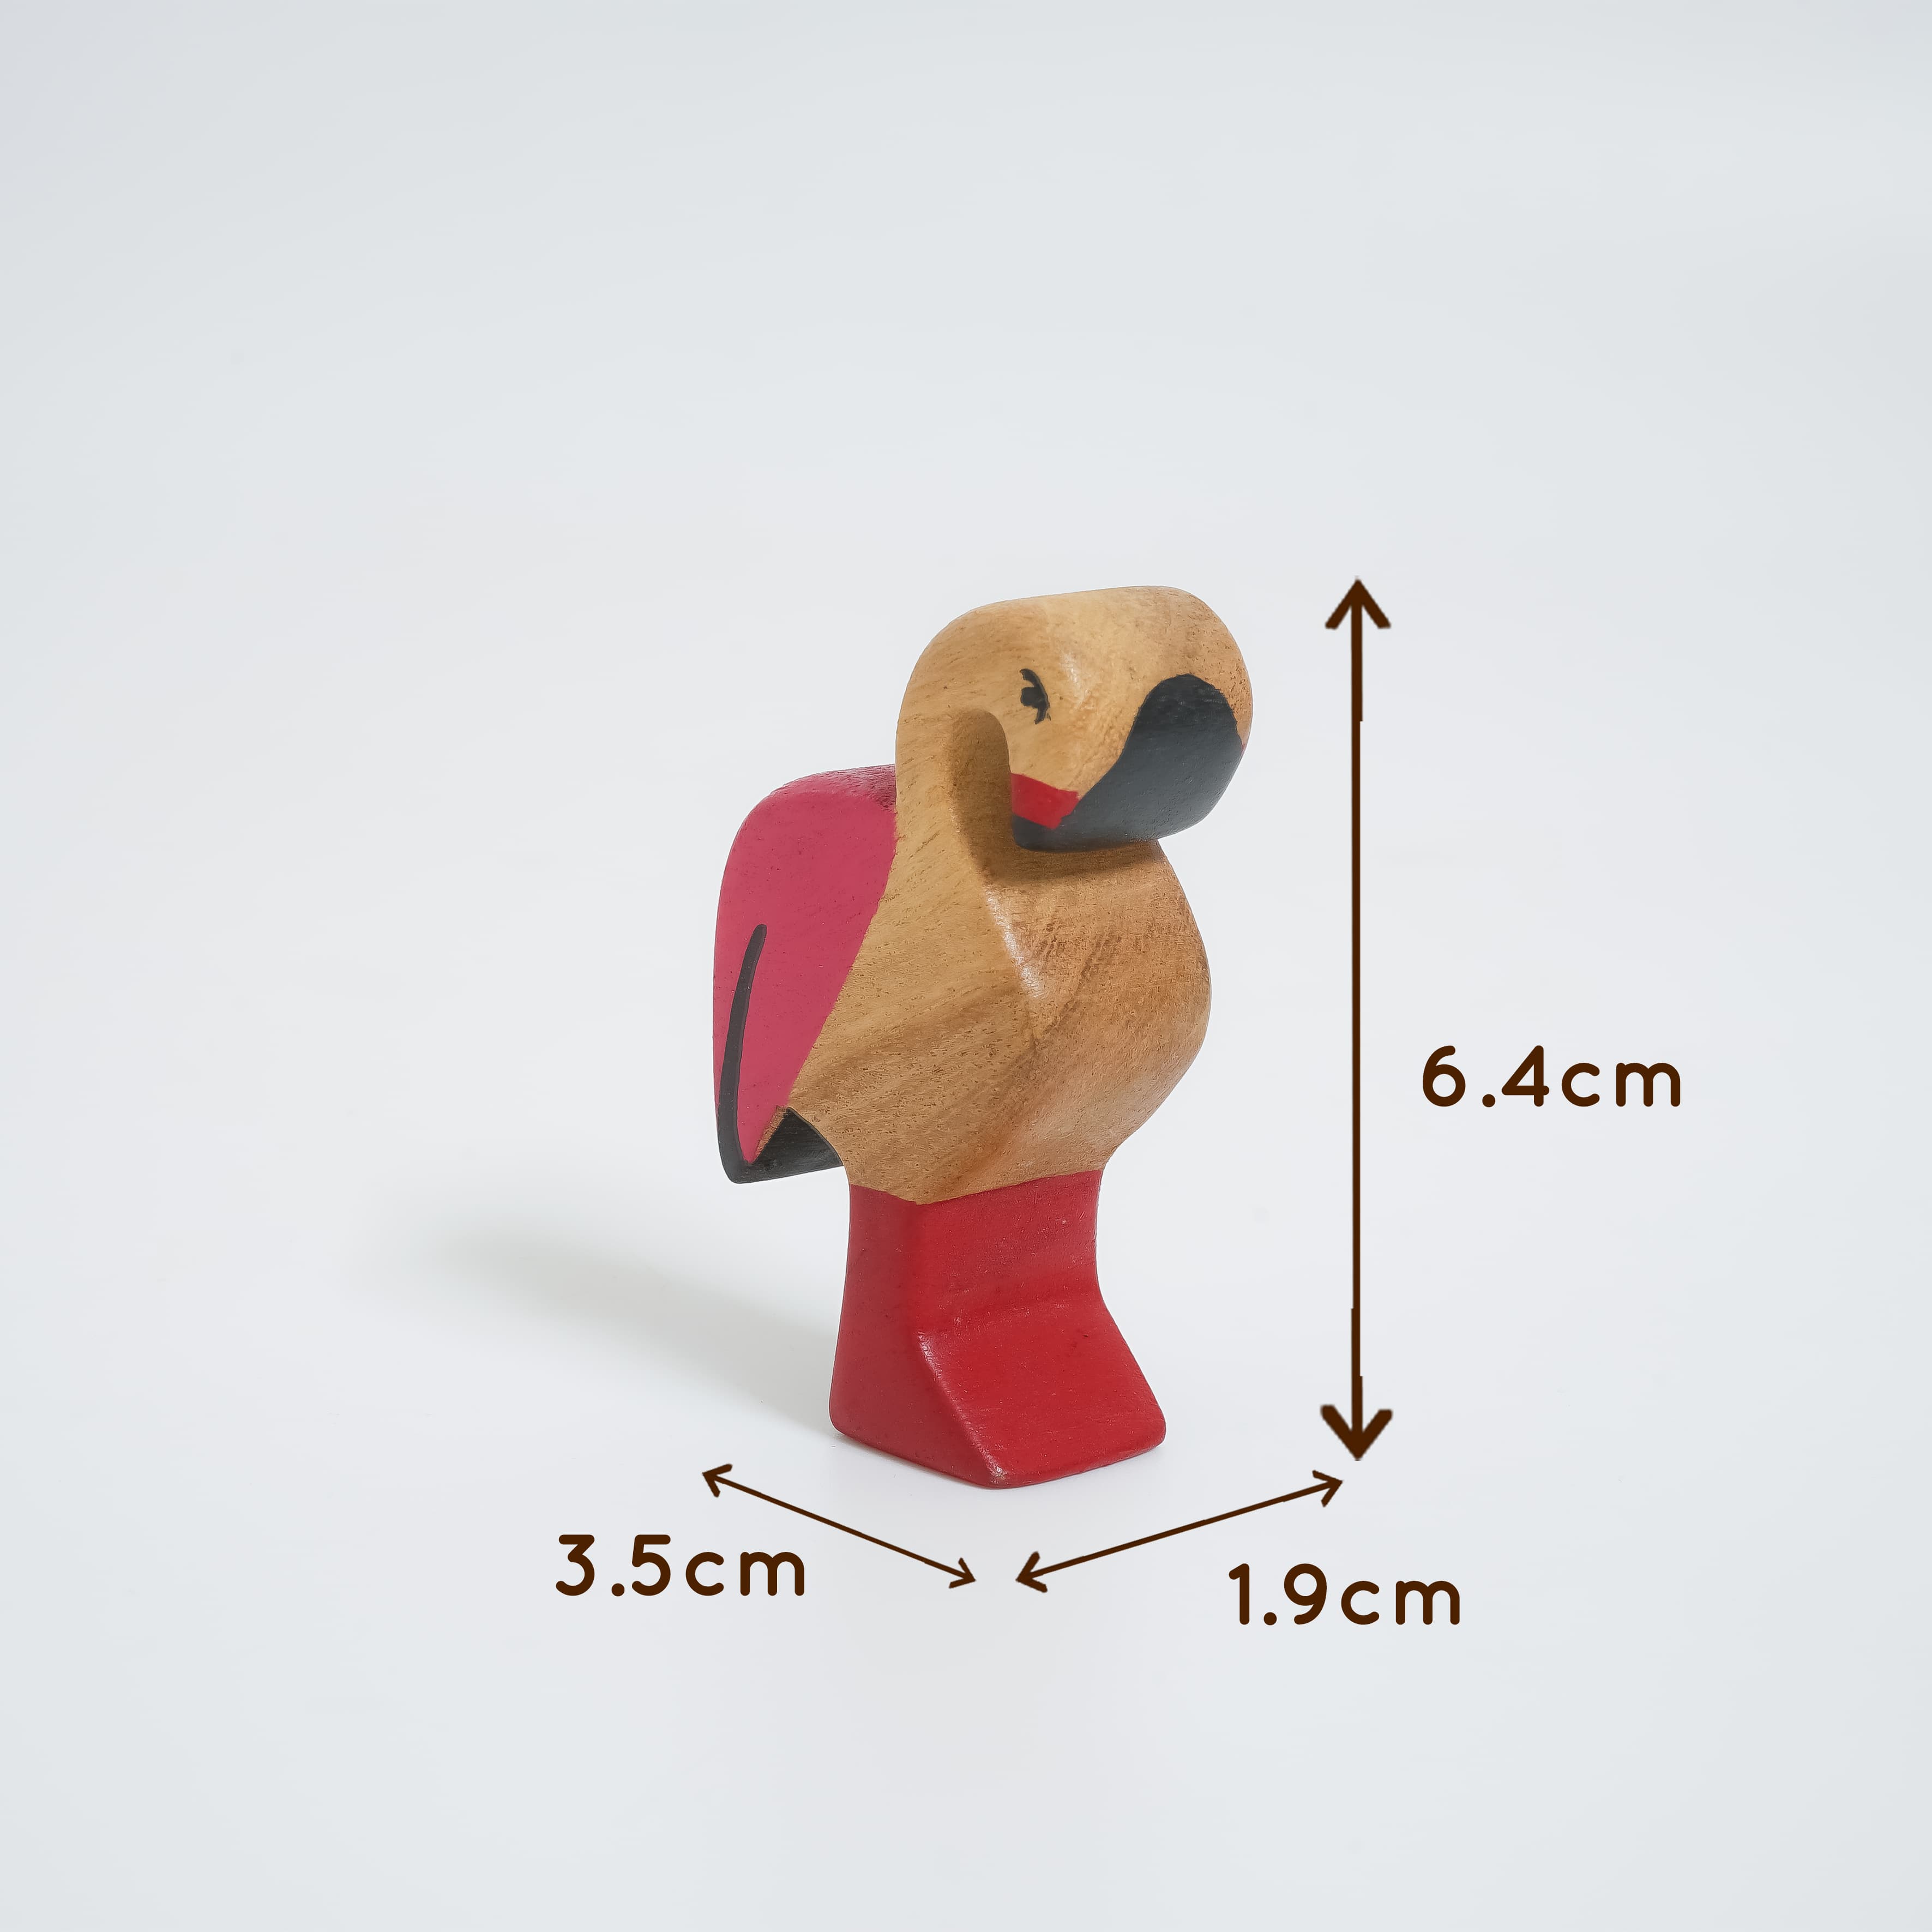 Wooden Figurines Toys – Flamingo